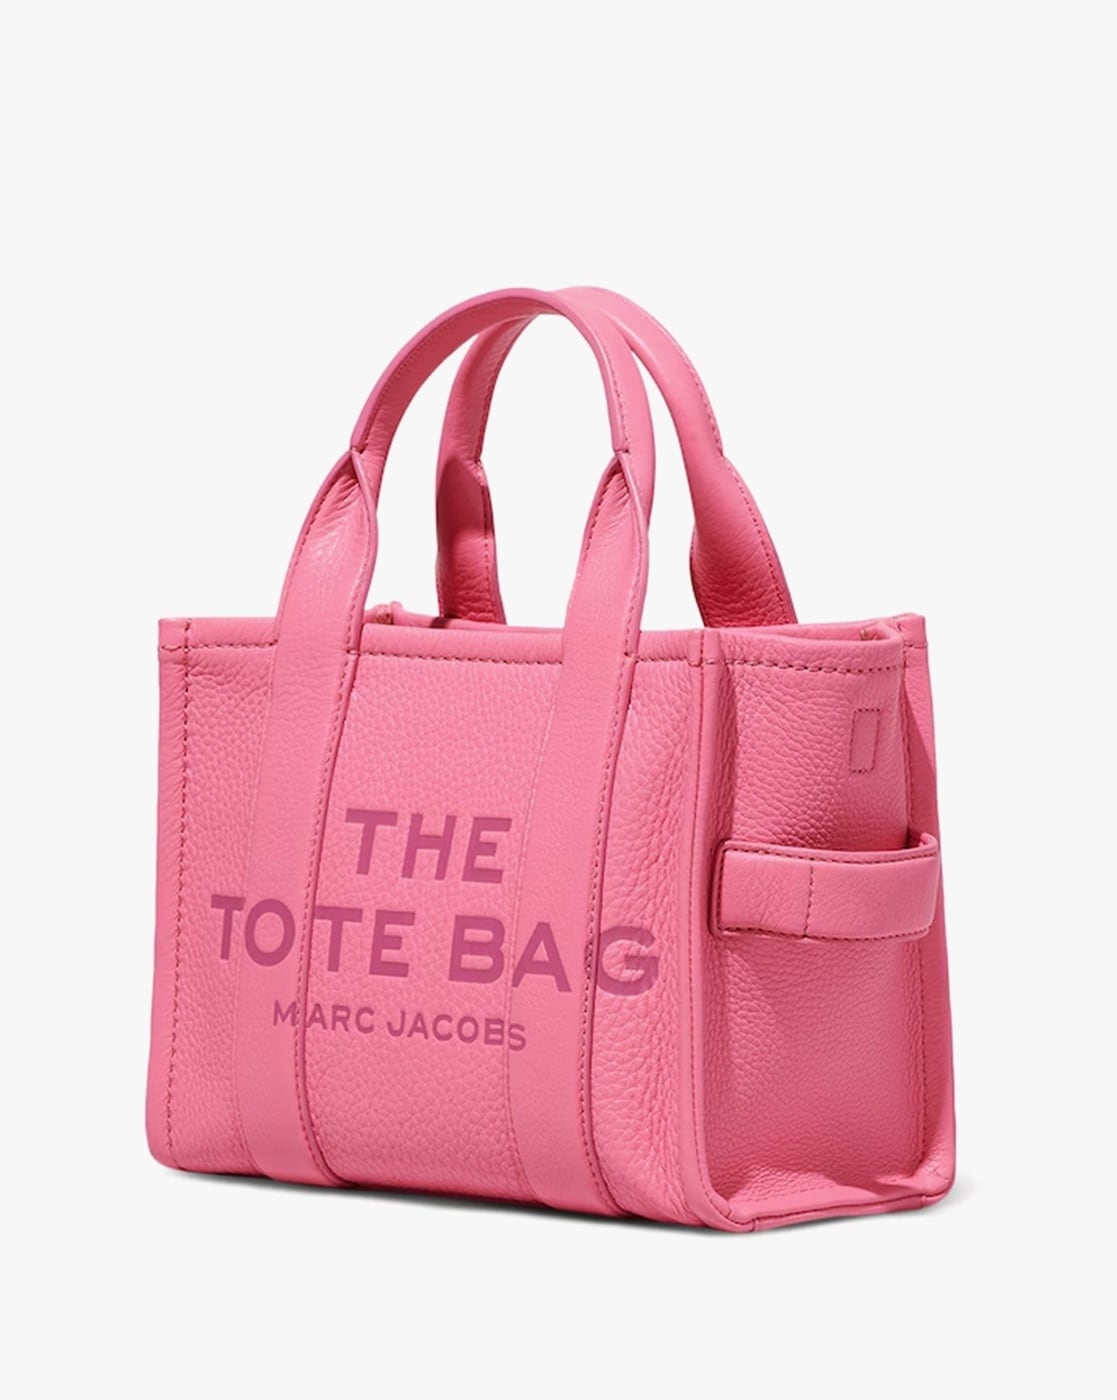 The Medium Tote bag, Marc Jacobs